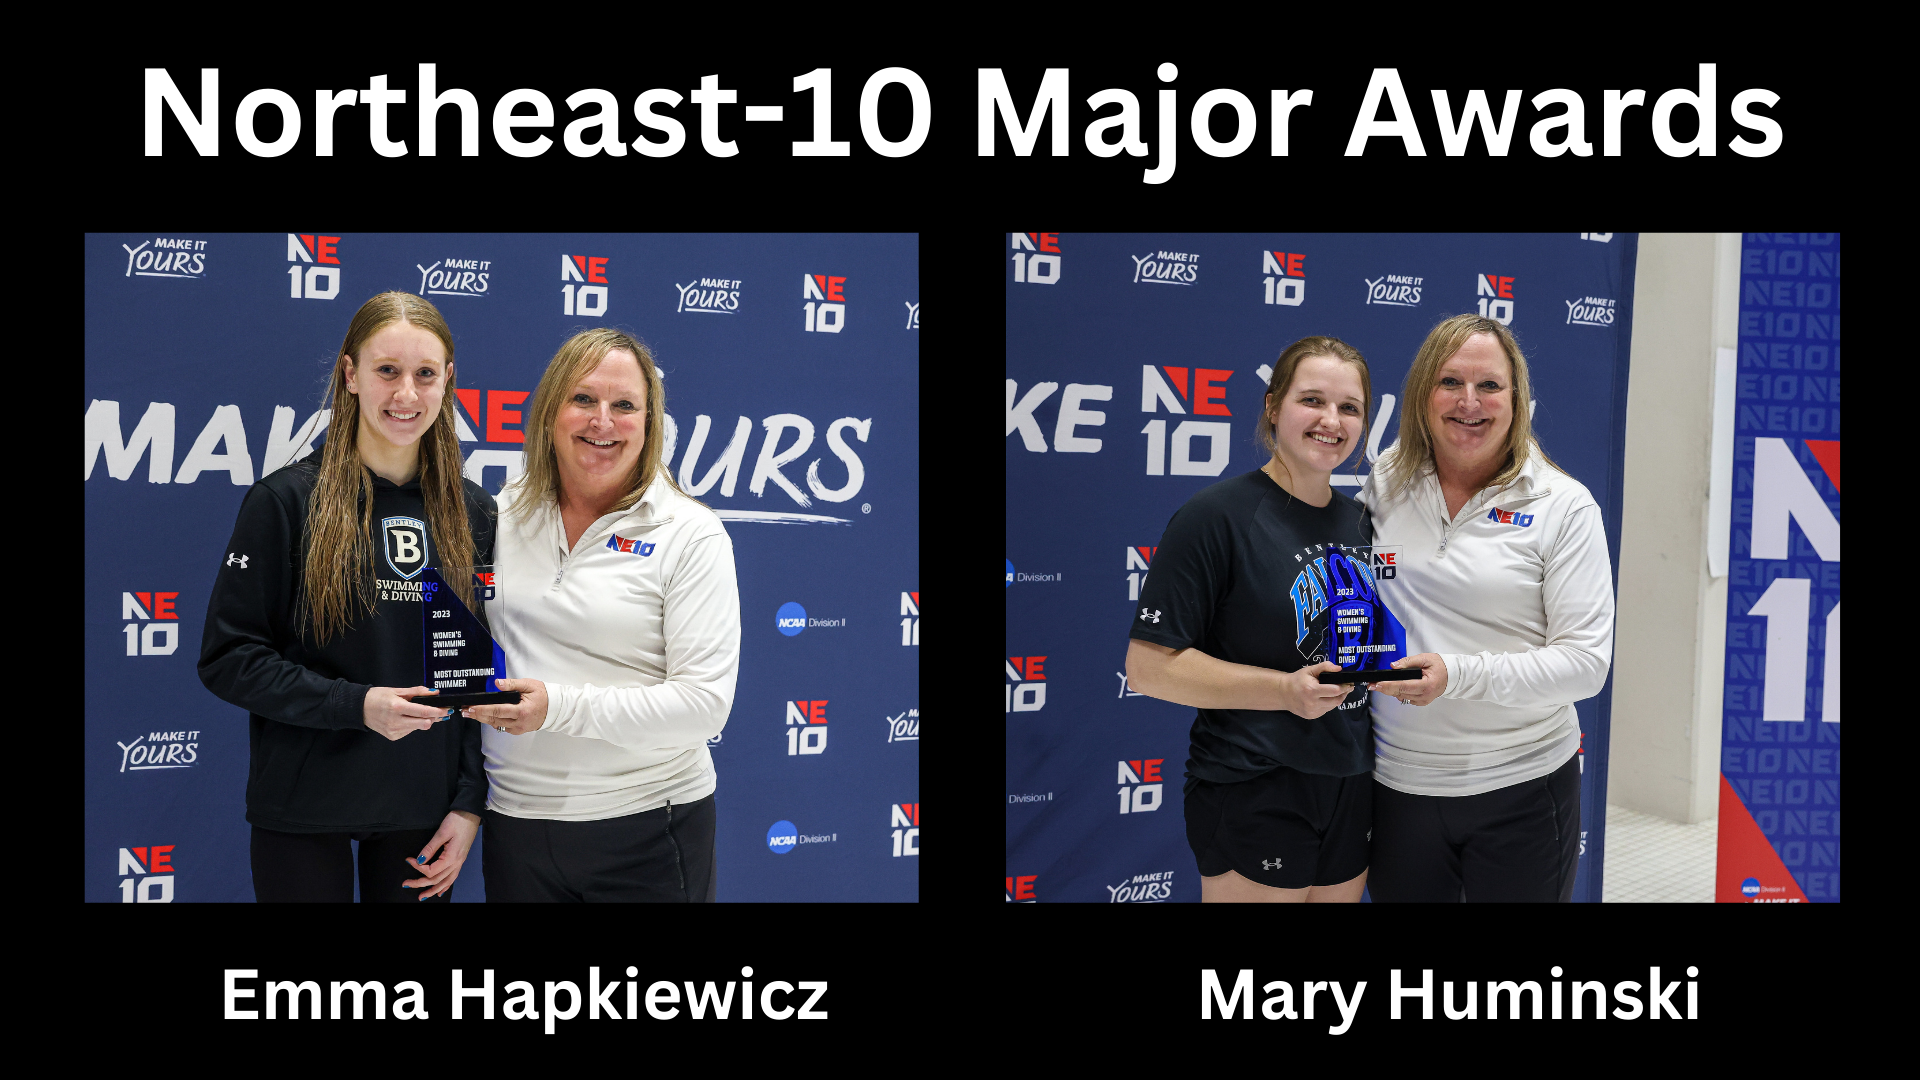 Emma Hapkiewicz and Mary Huminski received major awards following the Northeast-10 Championships